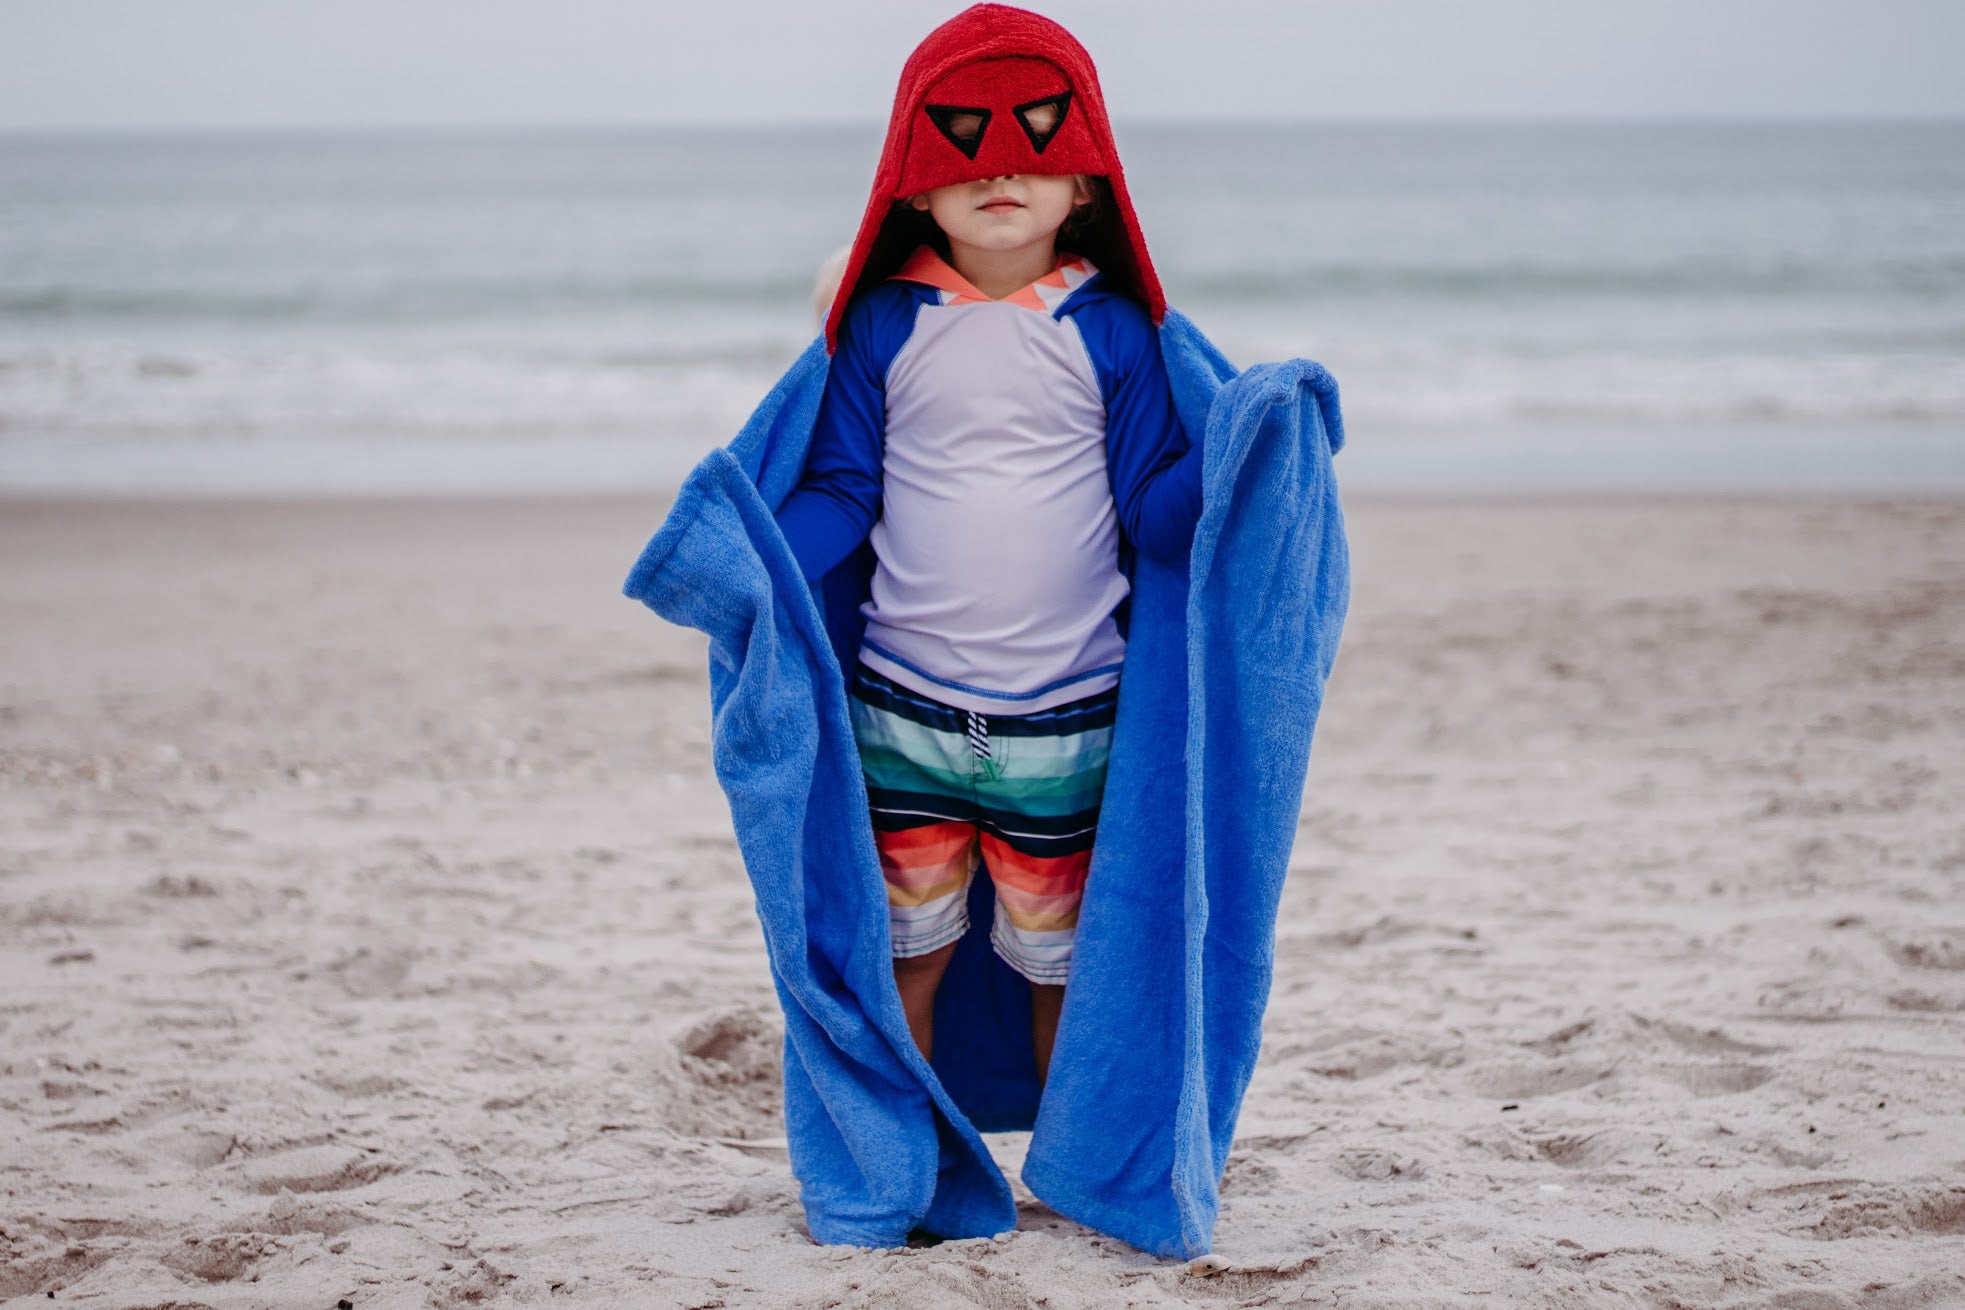 Personalized Hooded Towel- Superhero